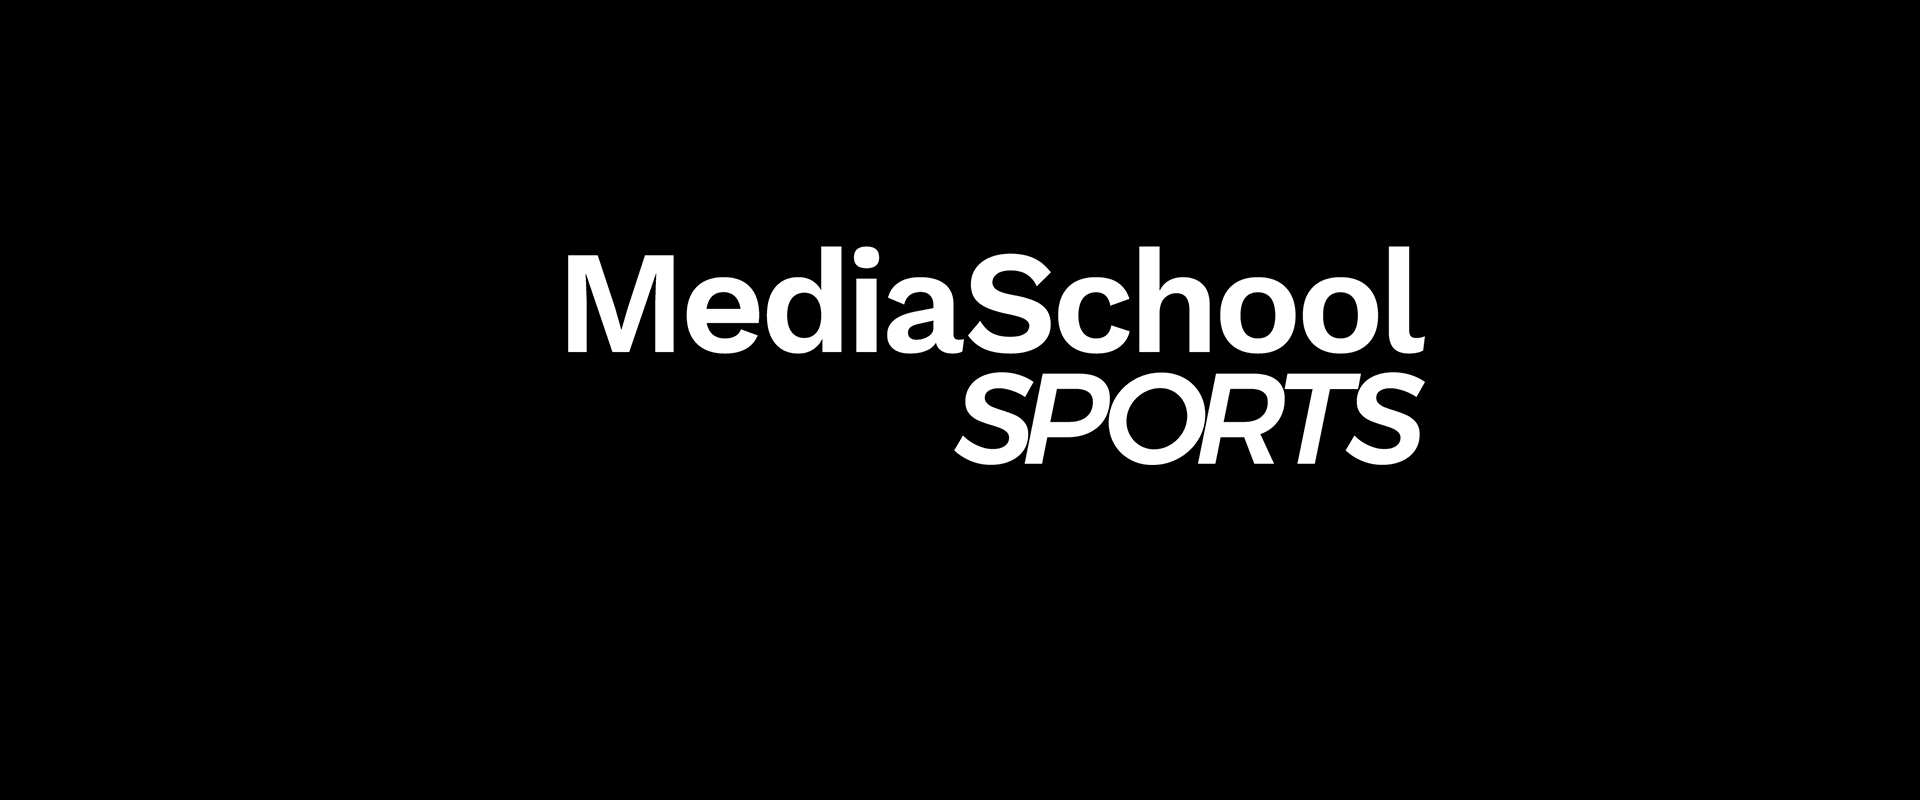 MediaSchool Sports